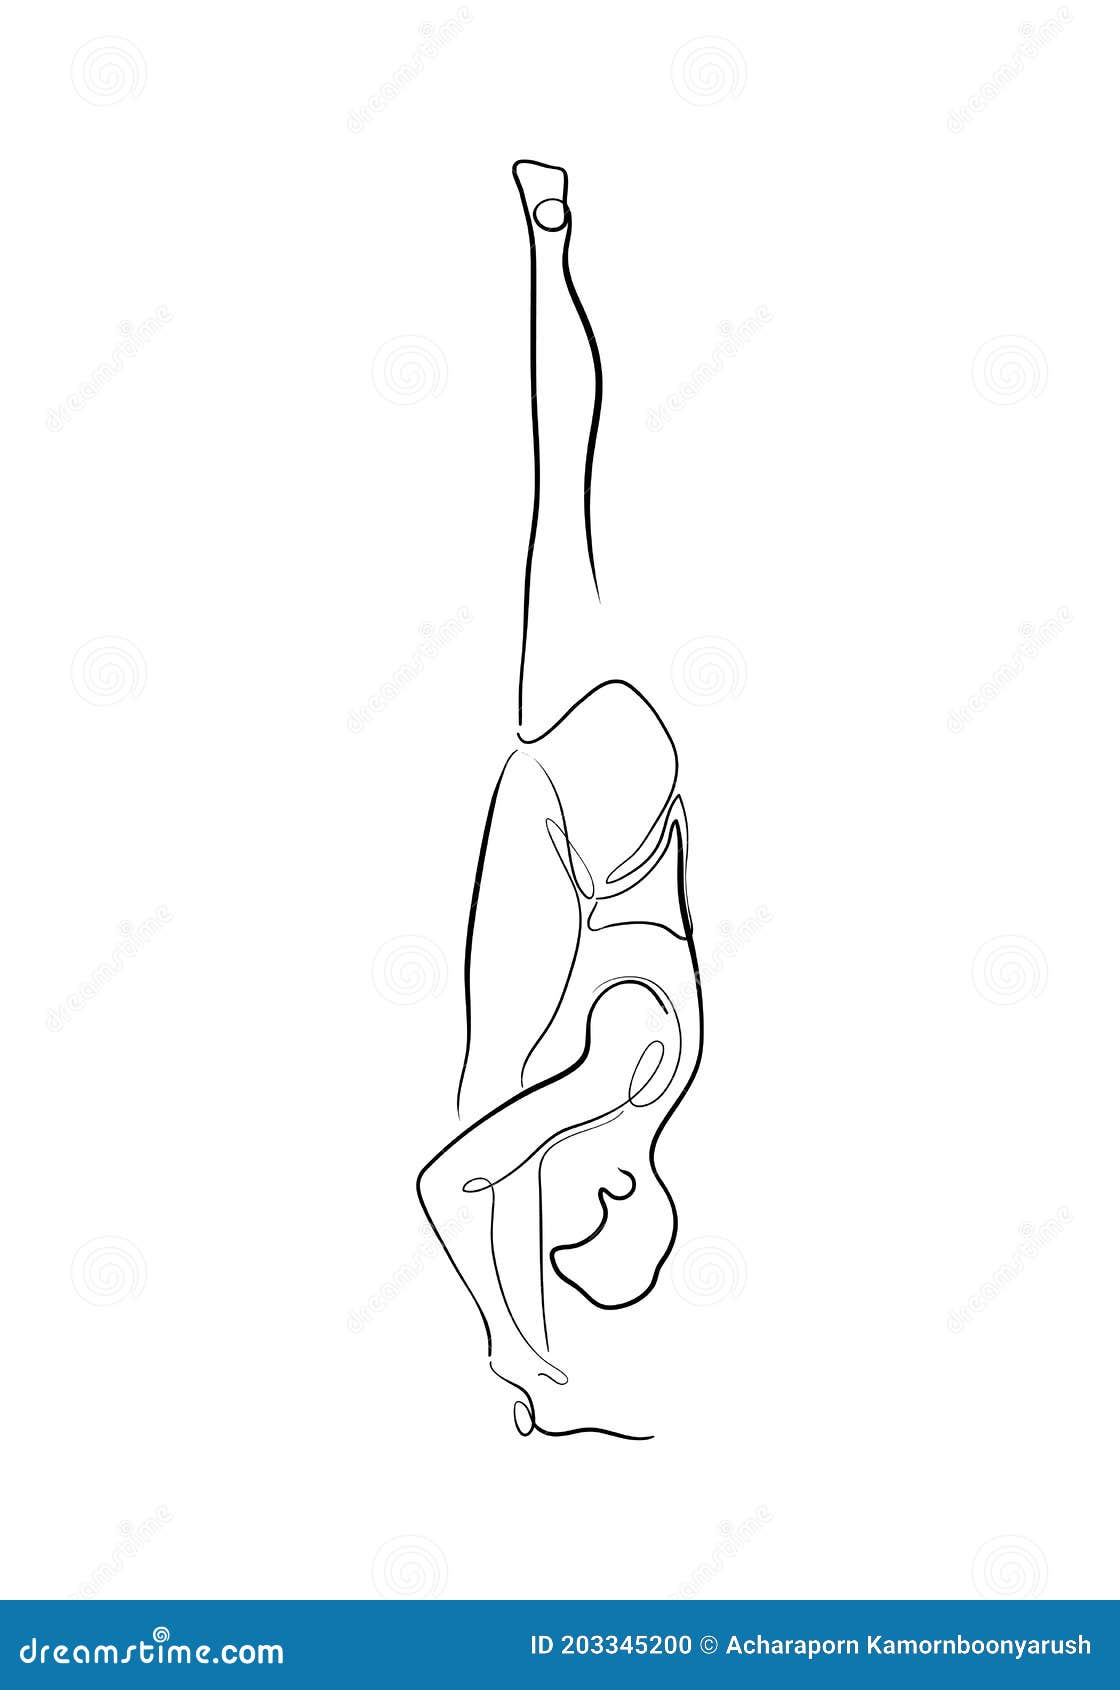 Hand Drawn Line Art Illustration of Urdhva Stretched Upward Pose Stock ...